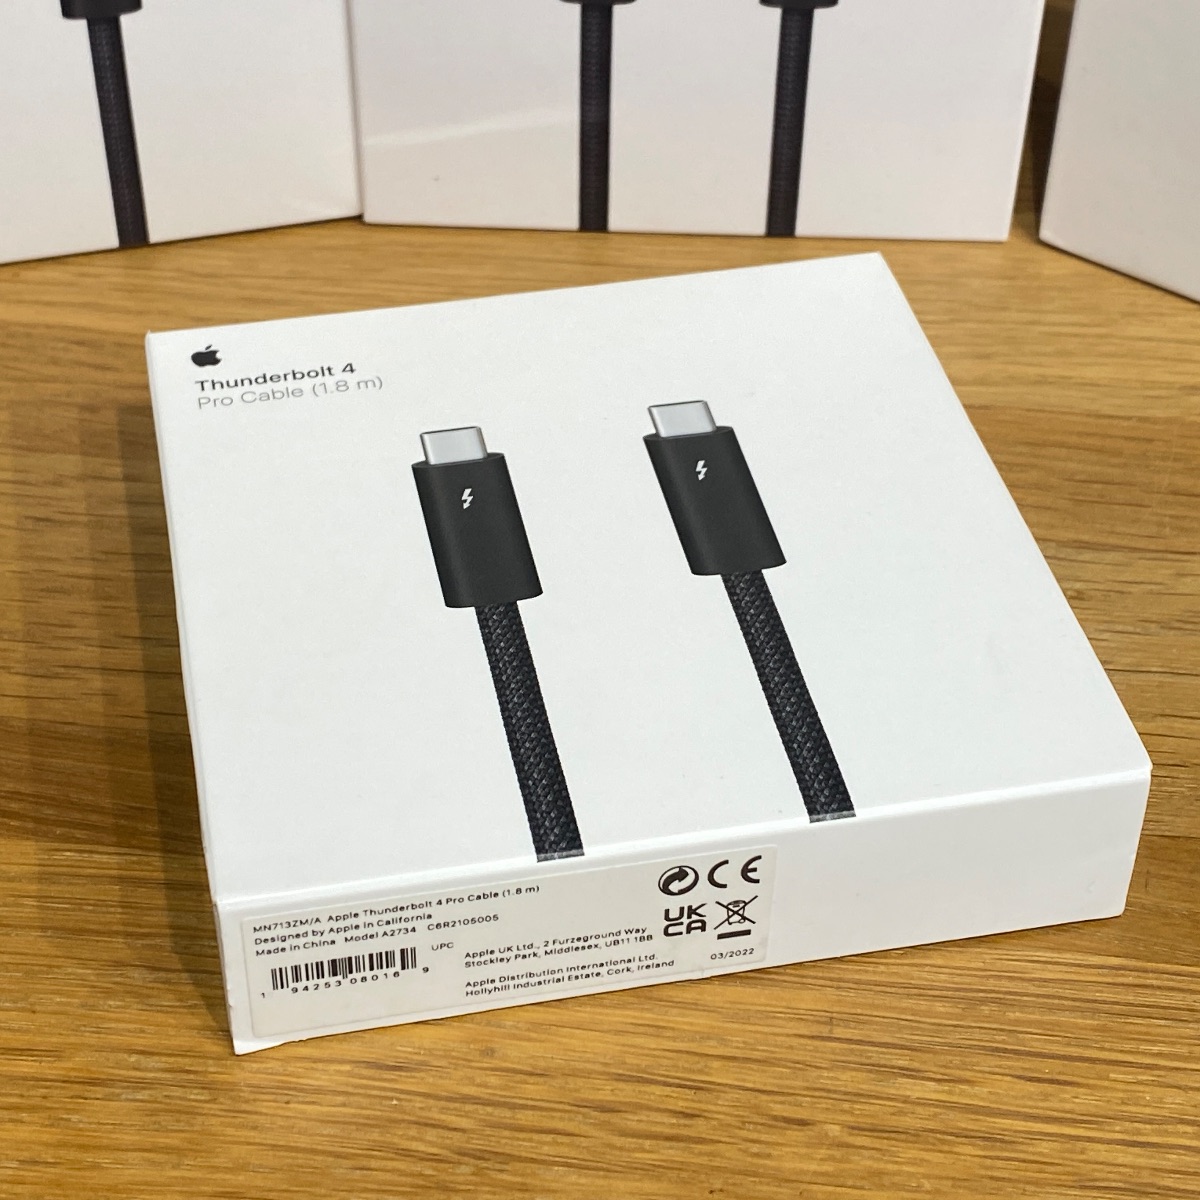 Apple Thunderbolt 4 Pro 1.8m Cable USB-C MacBook iPad iMac 100% Original Boxed MN713ZM/A 0194253080169 (Brand New)